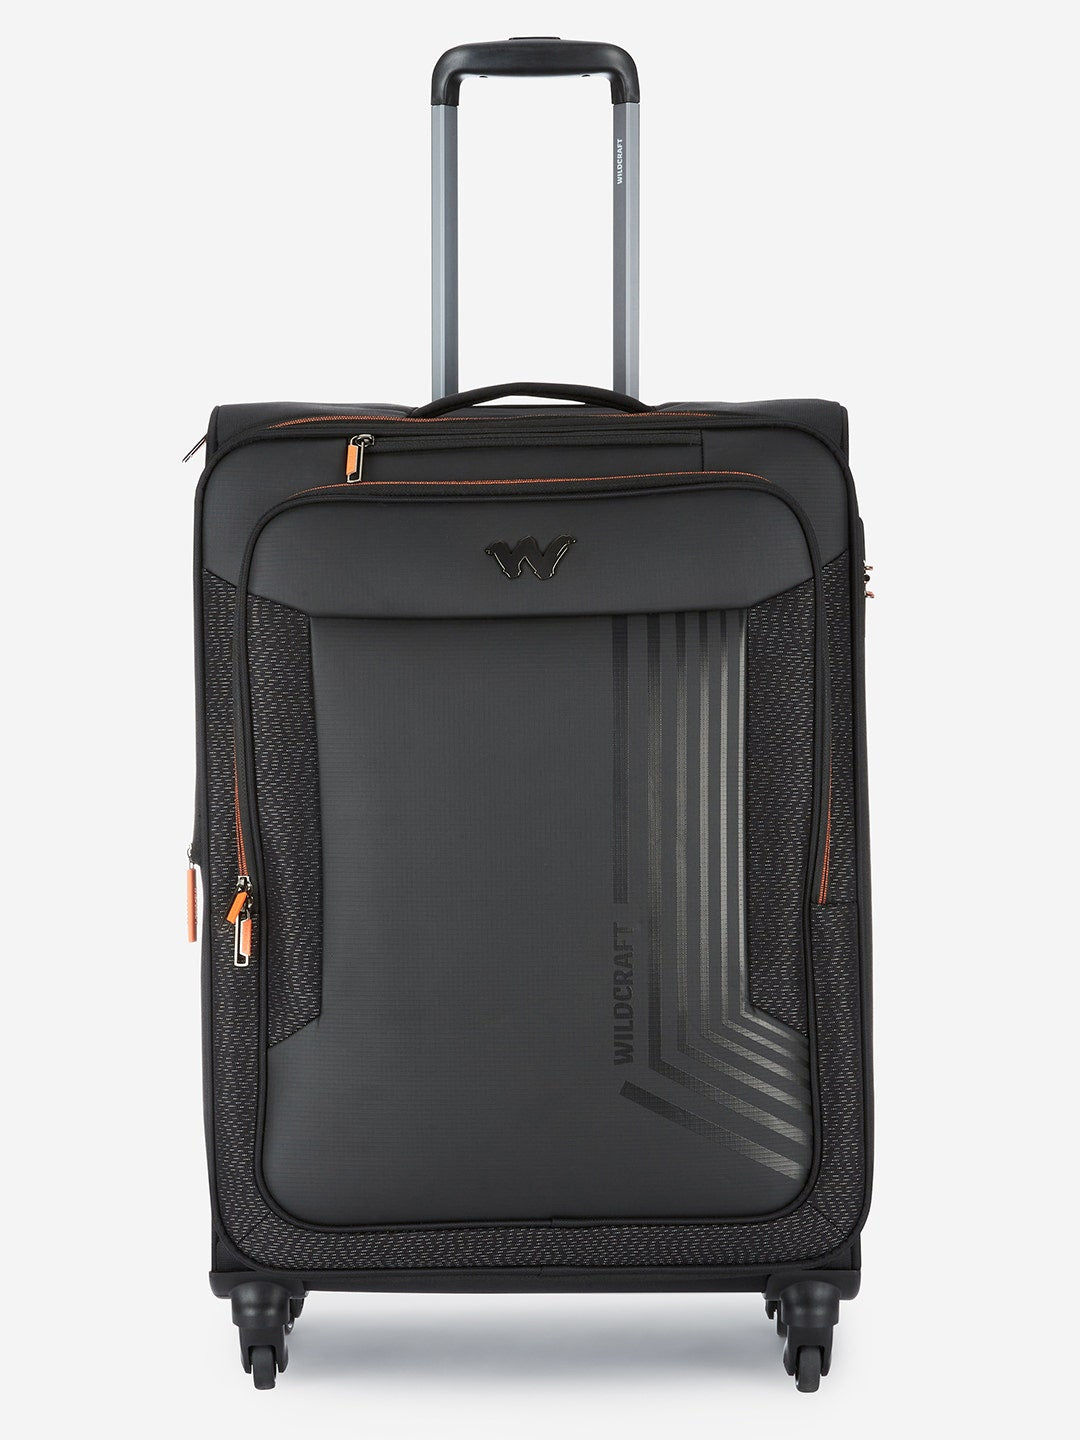 Wildcraft Travel Bags - Buy Wildcraft Travel Bags online in India